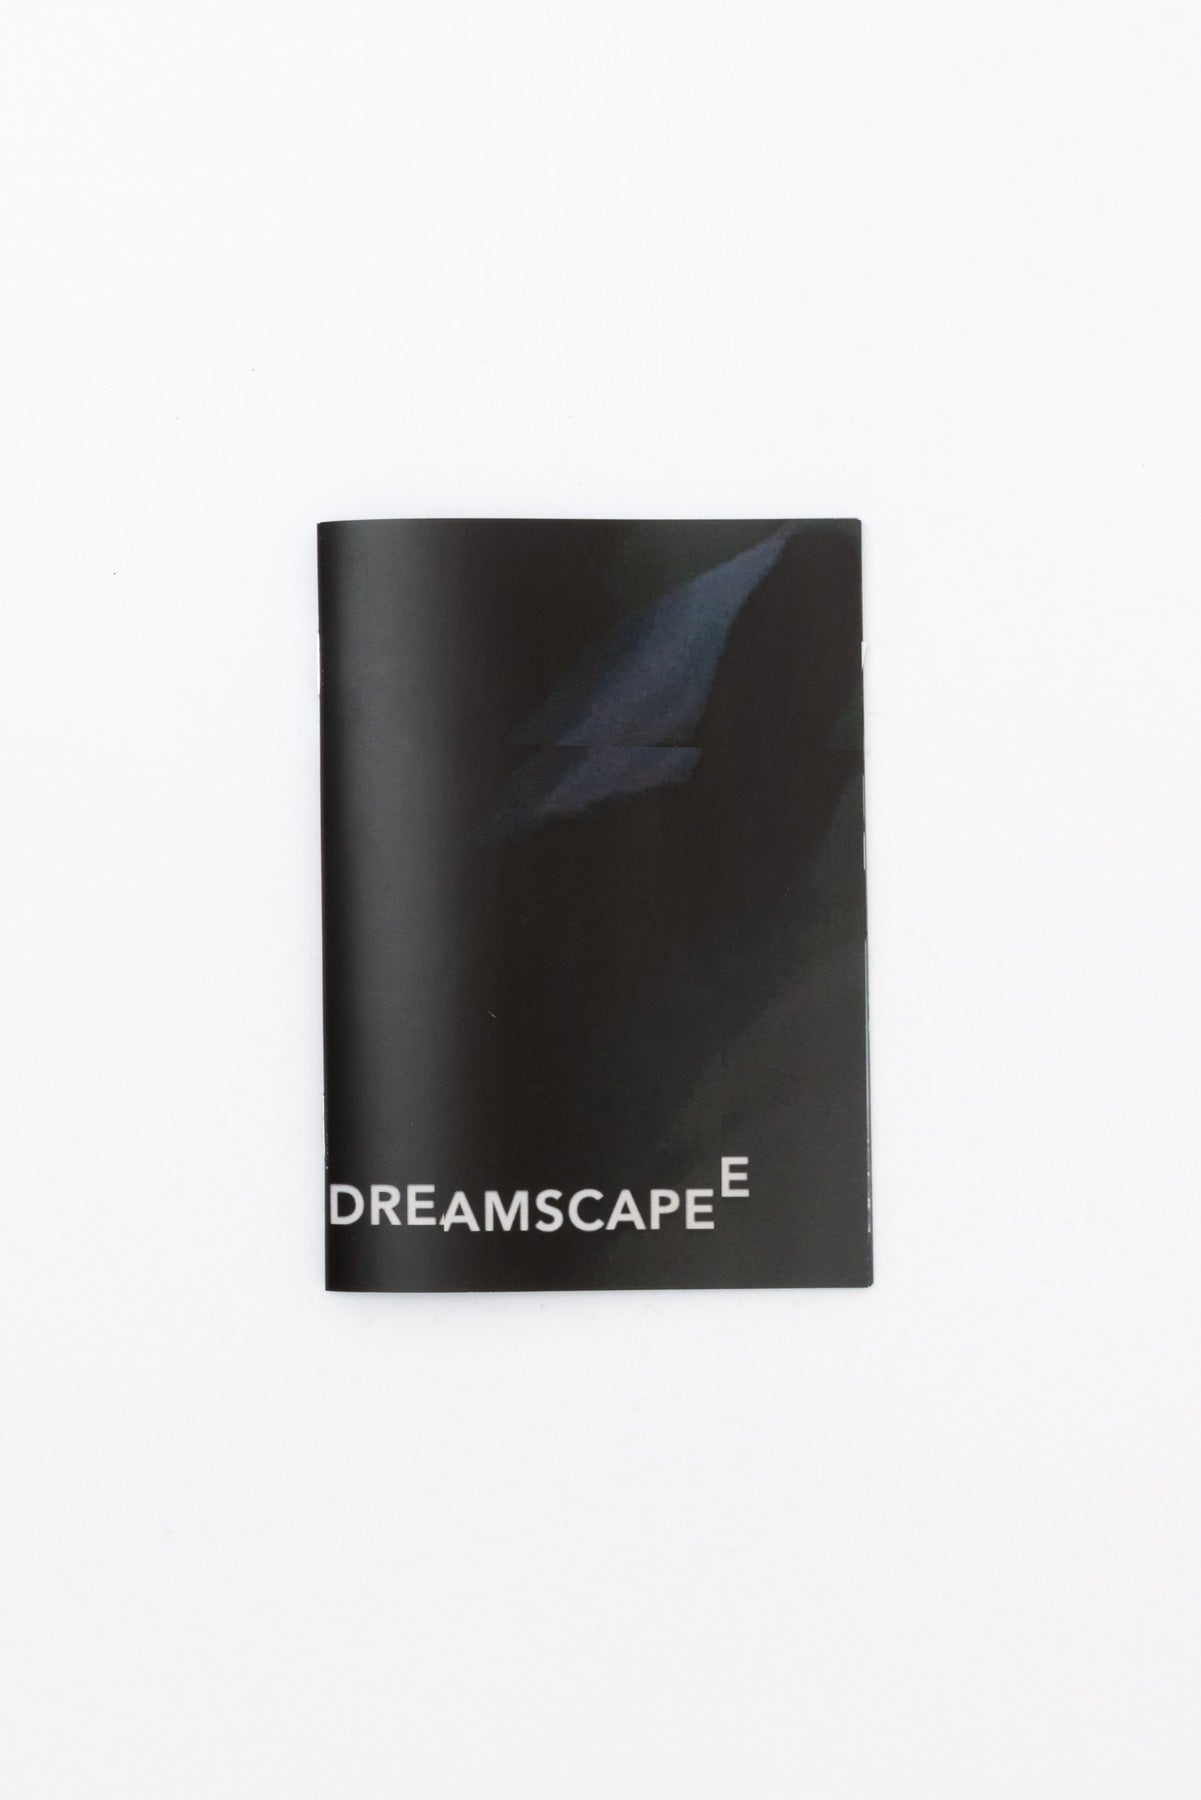 Post Industrial Dreamscape - Jermaine Francis